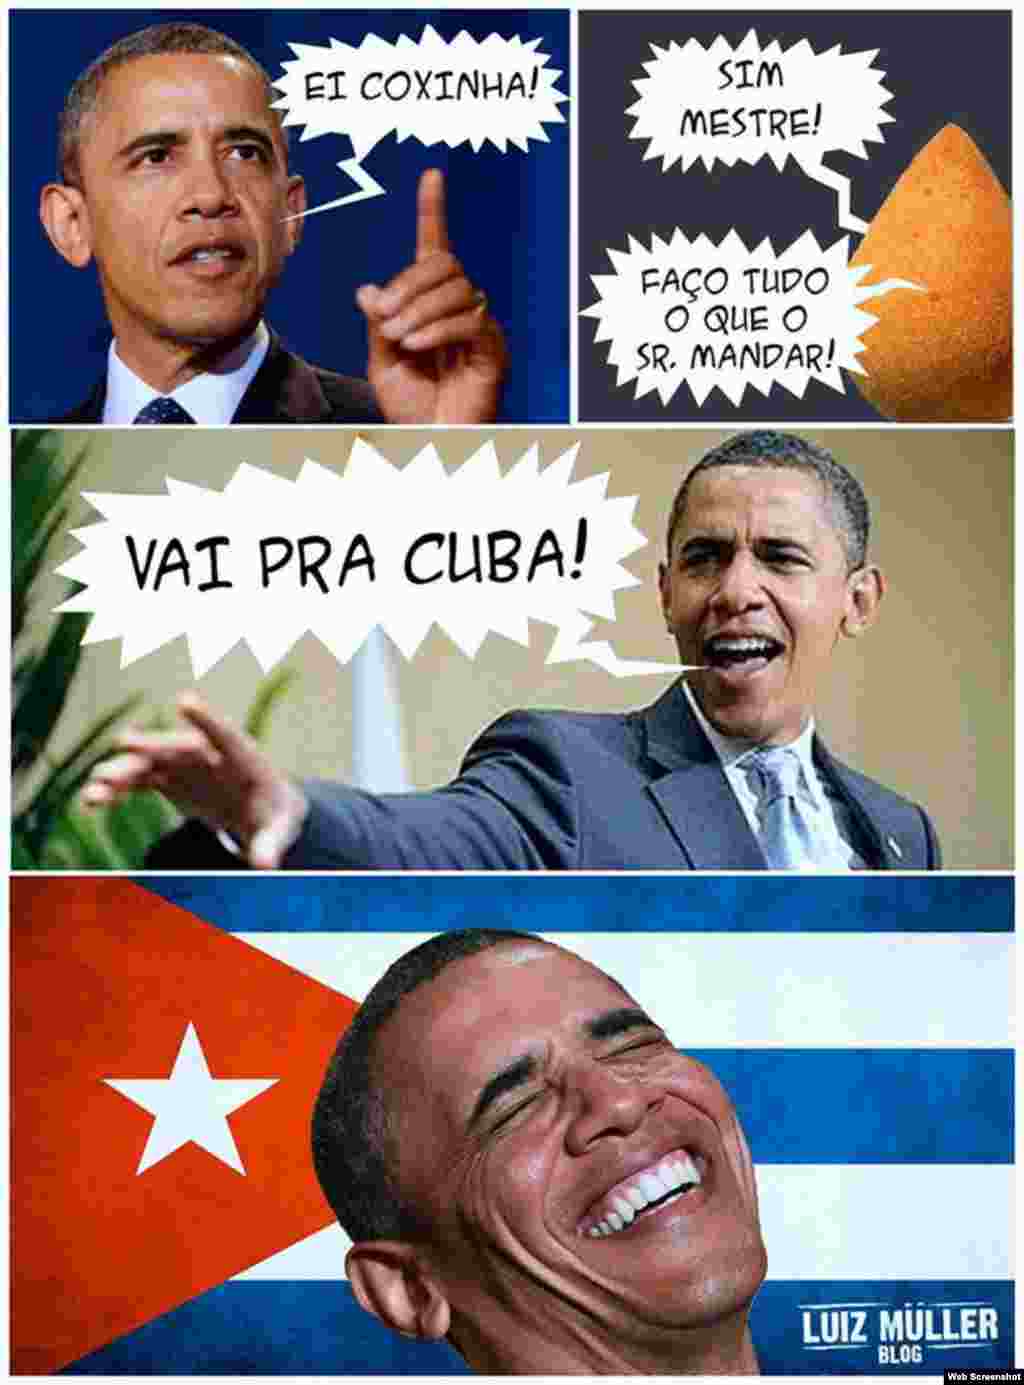 Obama &quot;Vai pra Cuba&quot; (Obama va para Cuba).